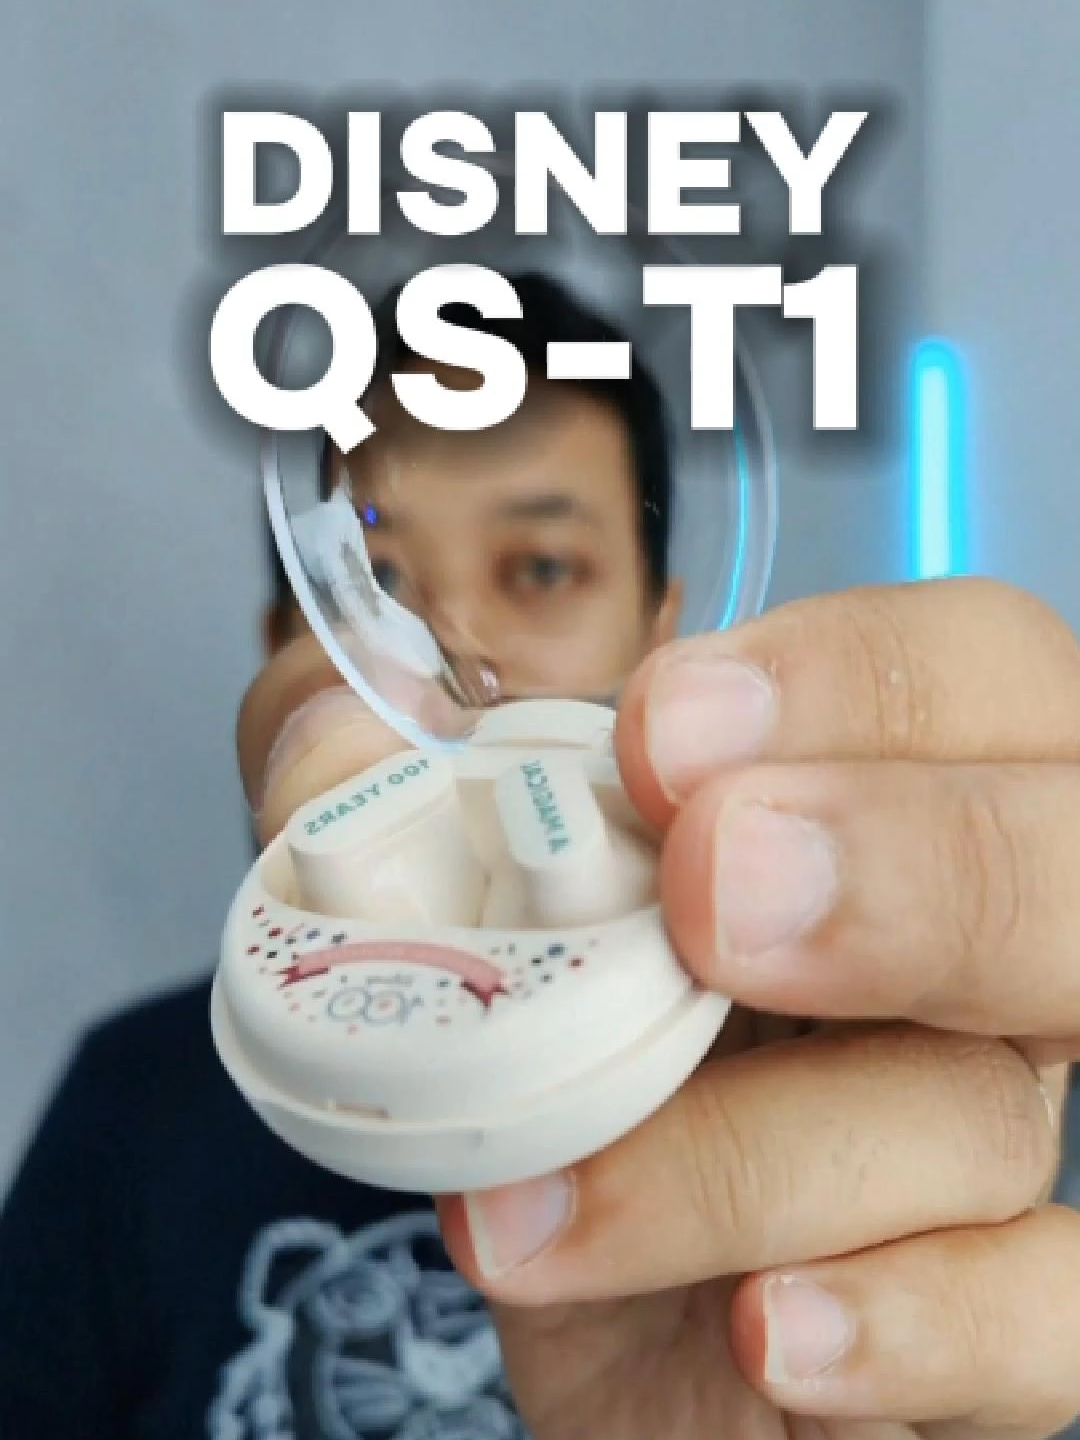 TWS Disney QST1 Bentuk Imut dan Kecil Tapi suara bassnya nampol #disney #disneyqst1 #qst1 #tws #twsbluetooth #headset #headsetbluetooth